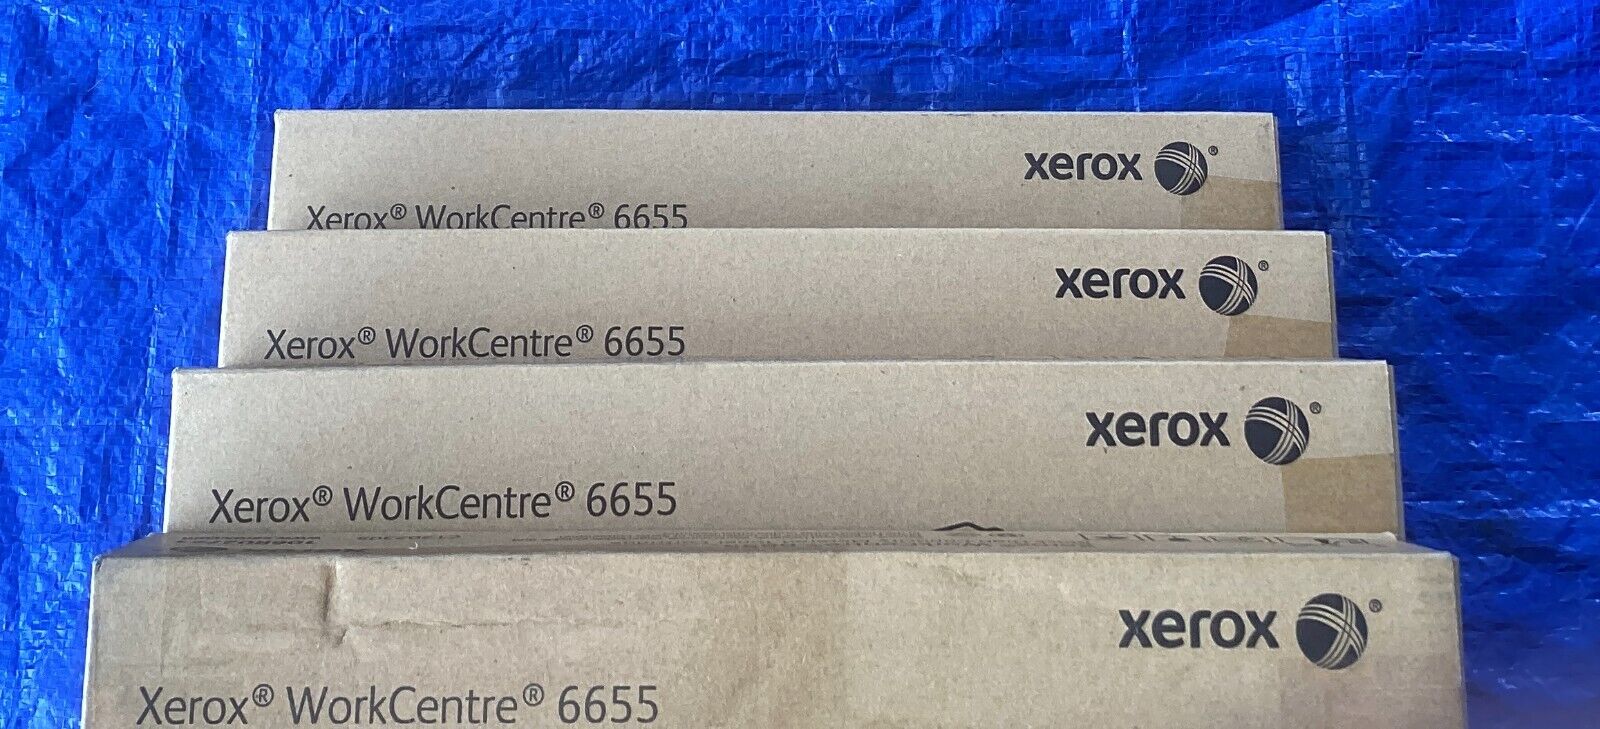 NEW Lot of 4 Xerox WorkCentre 6655 Toner Cartridge Black Cyan Magenta Yellow